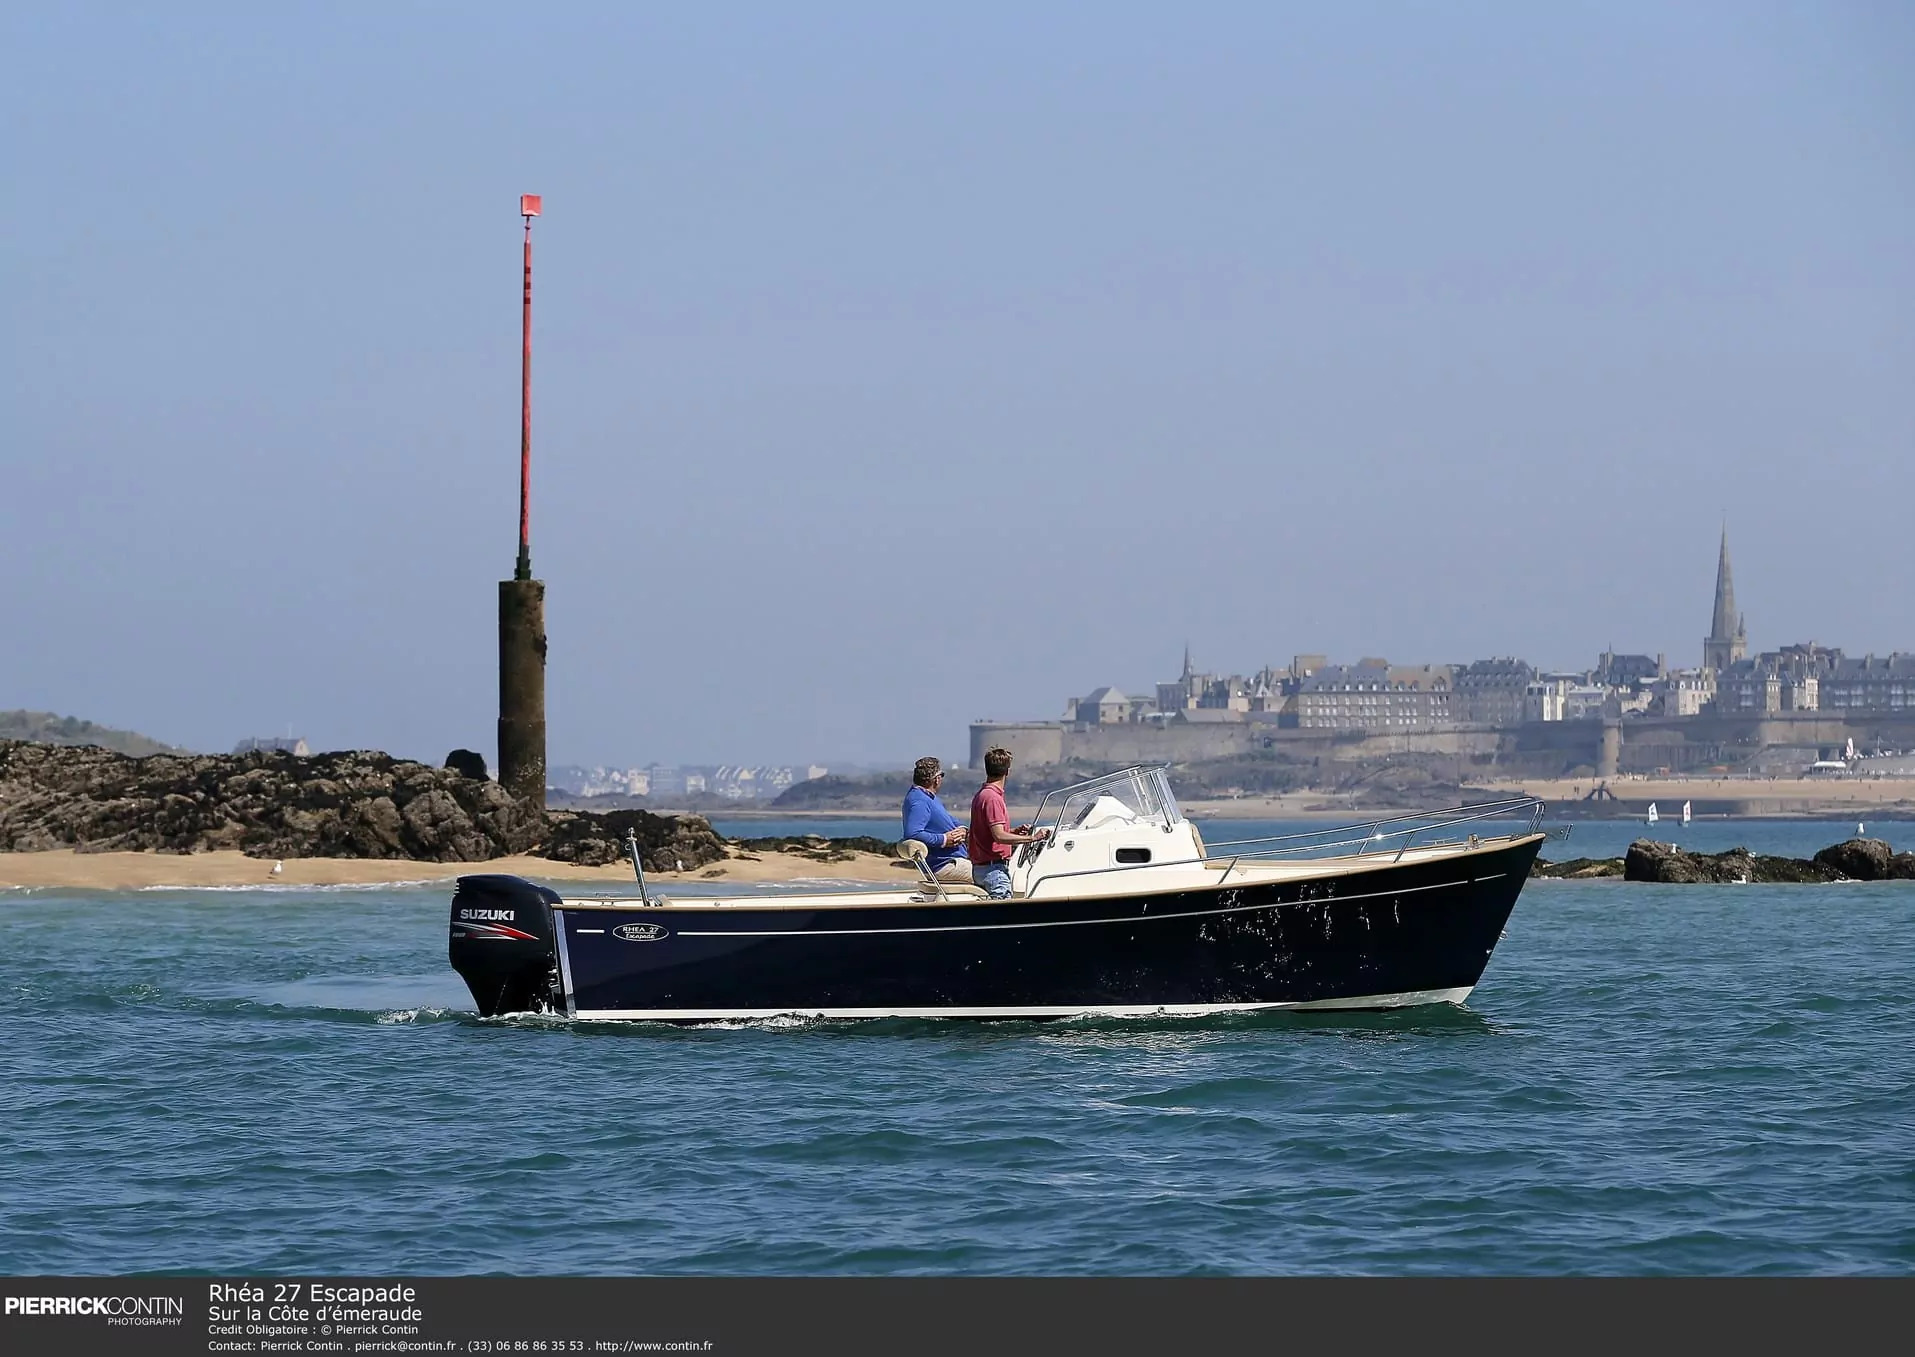 Brest Ocean Boat